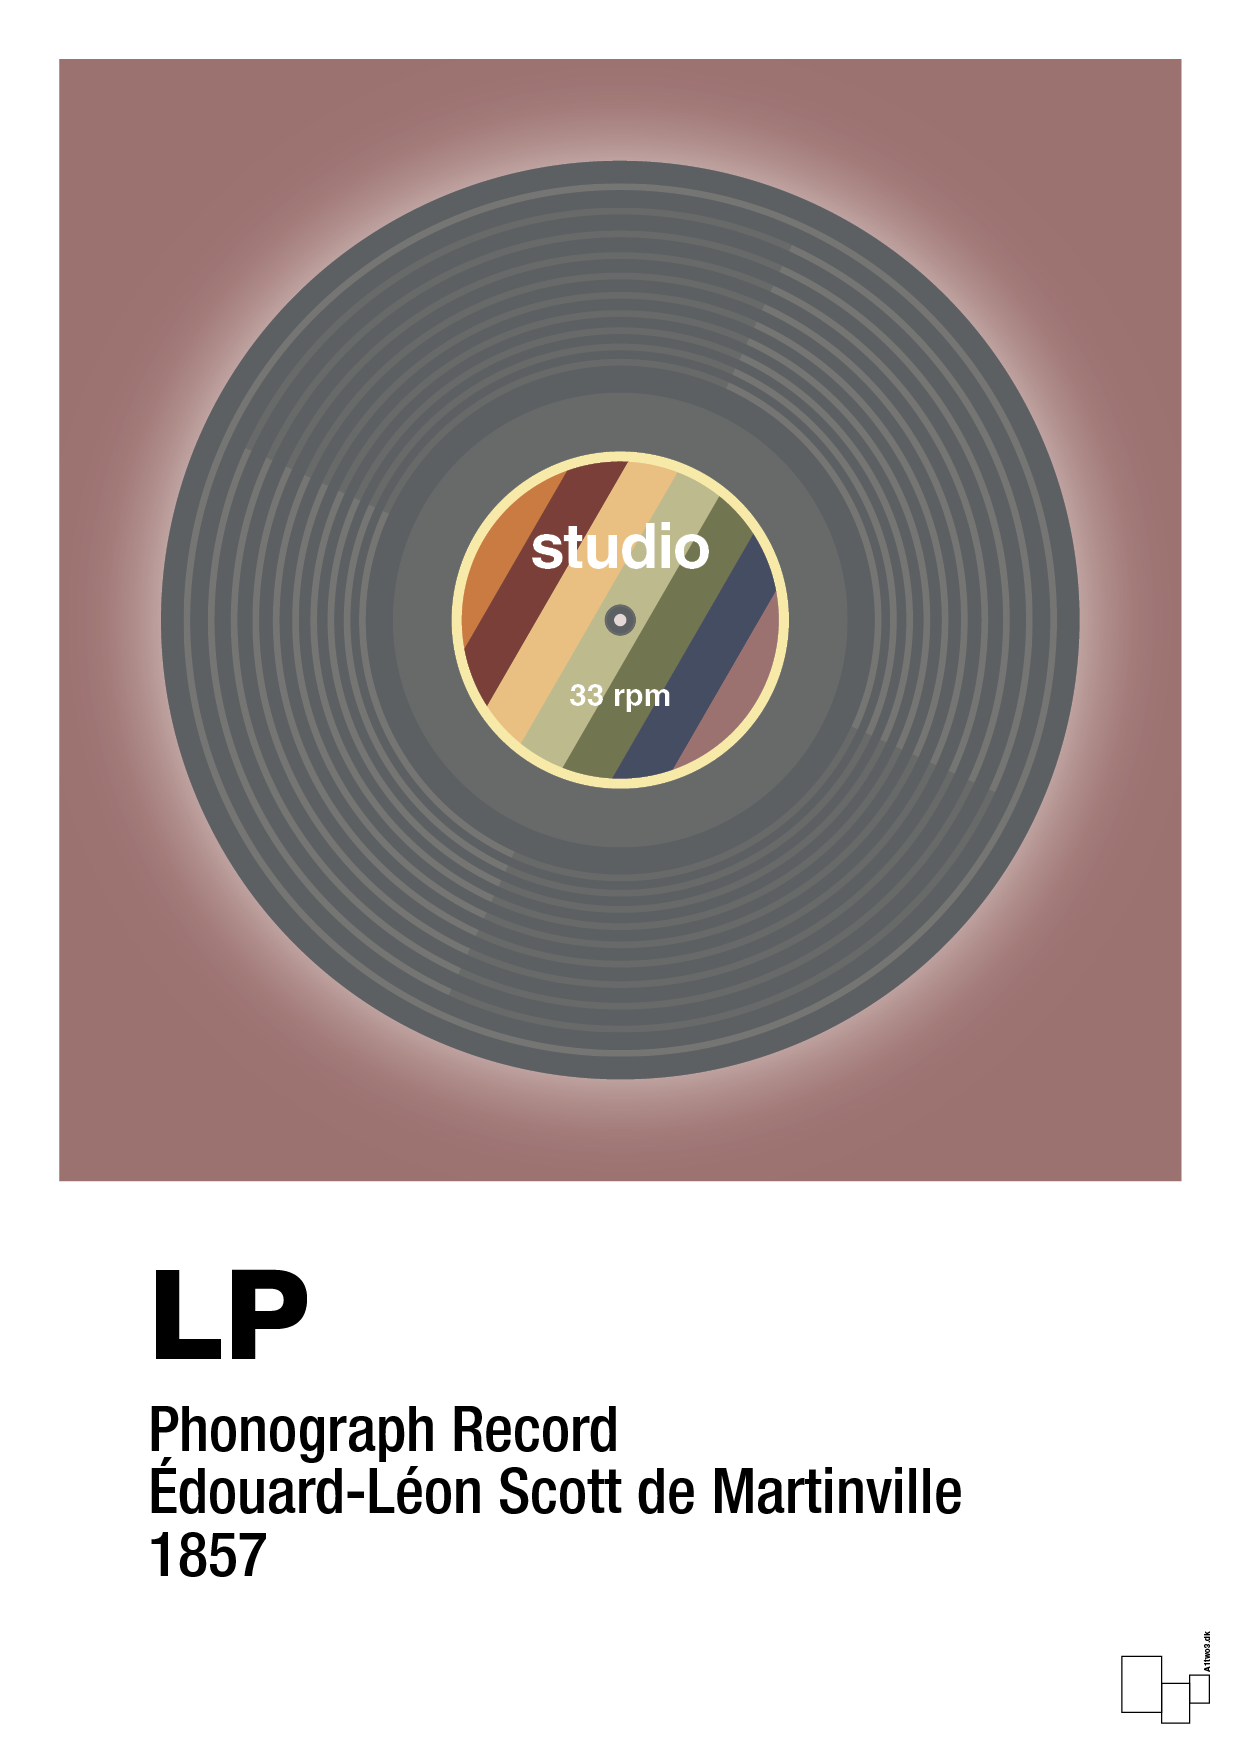 vinylplade 33rpm - Plakat med Grafik i Plum